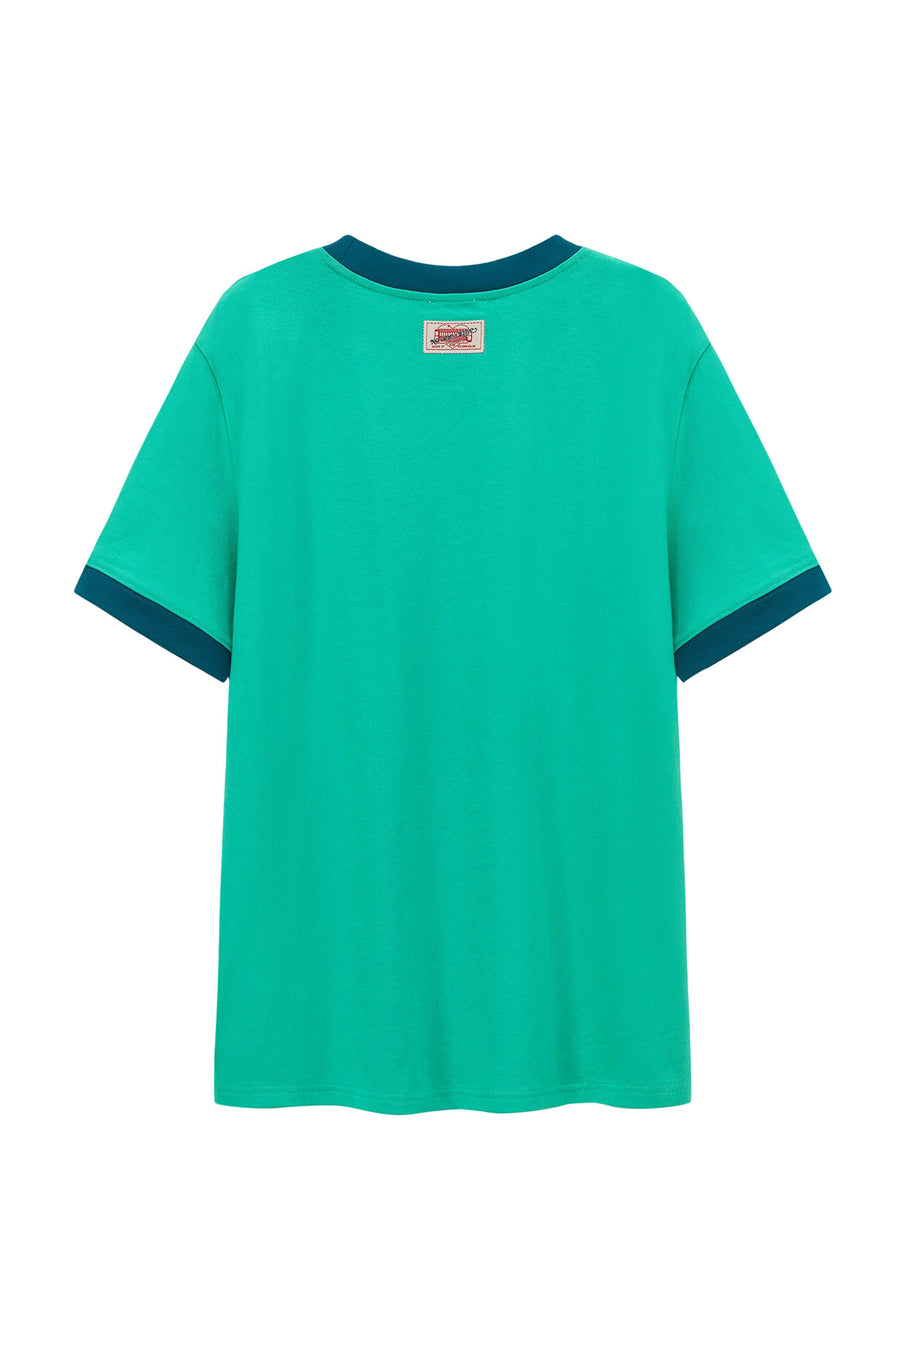 CHUU Noe Center Logo Color Loose Fit T-Shirt